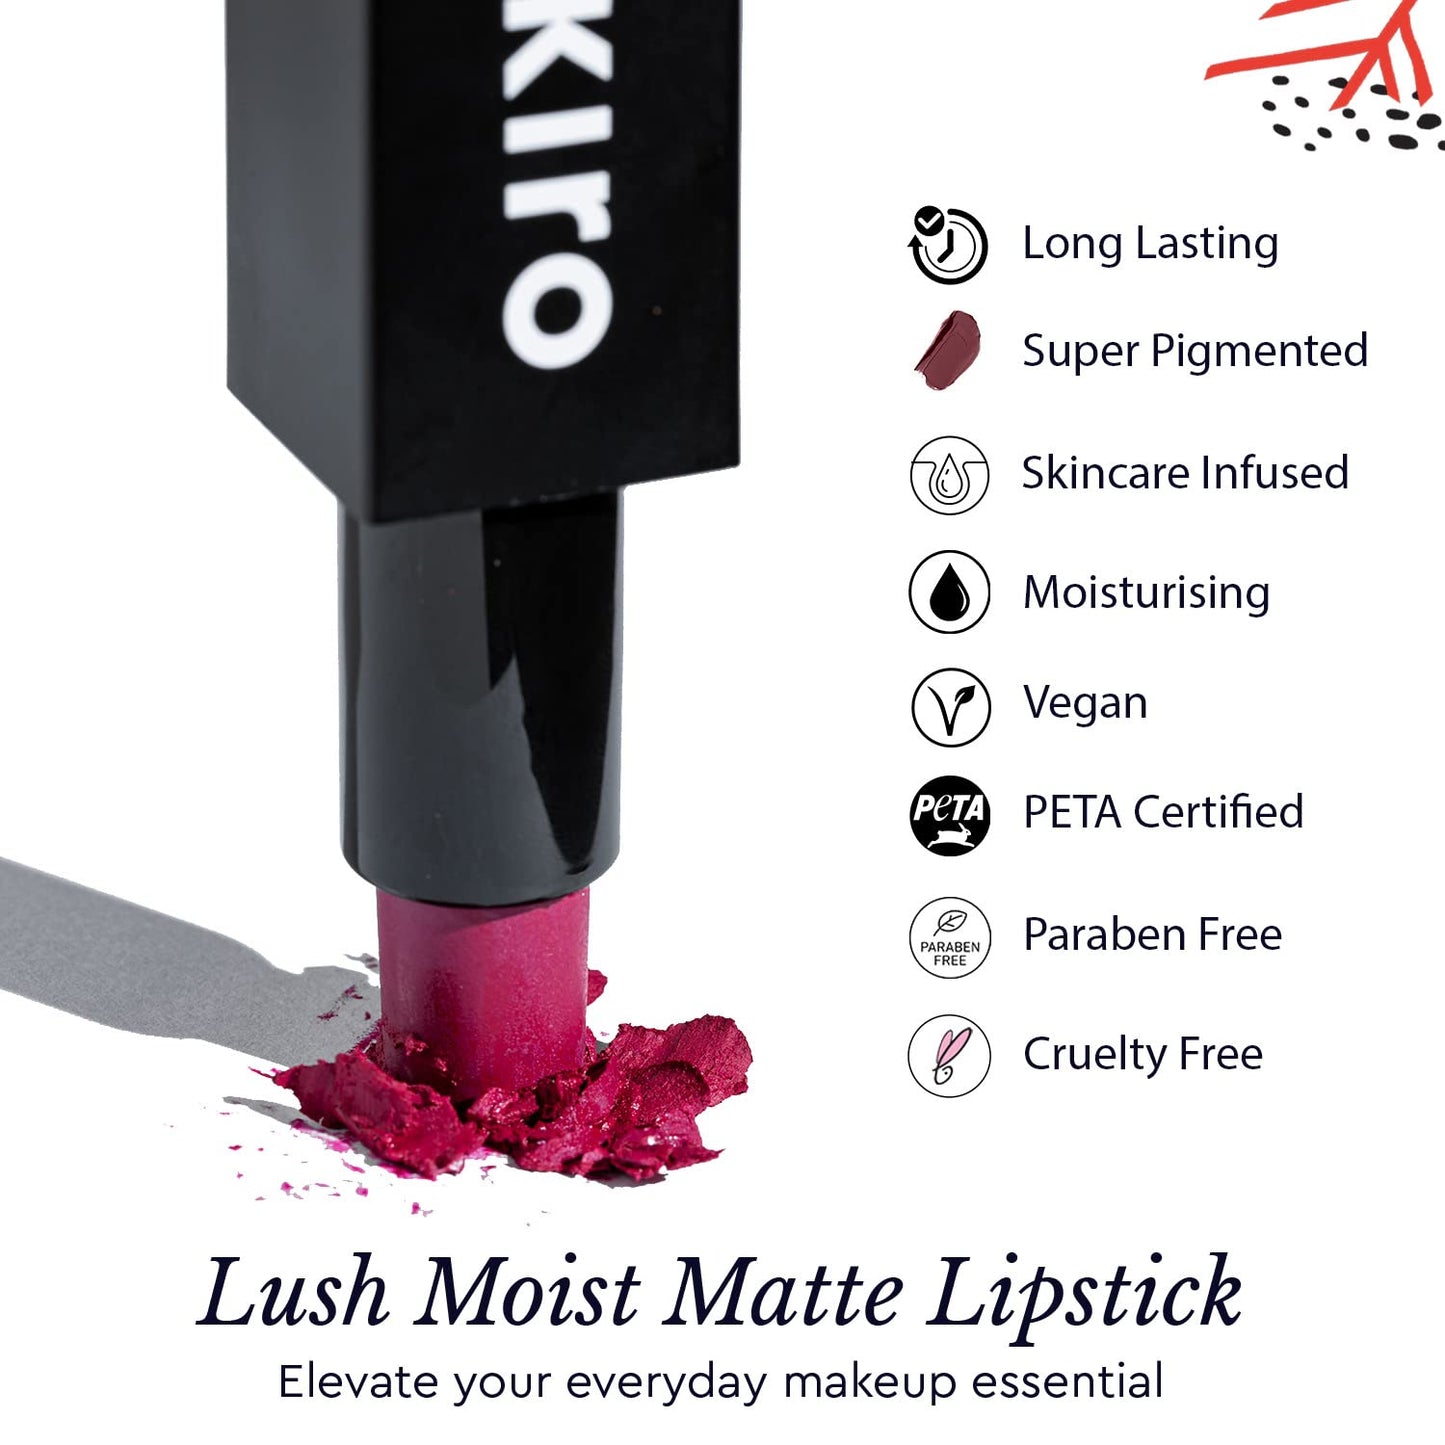 Kiro Lush Moist Matte Lipstick Hibiscus Petal (Berry Pink), 4.2 gm, Smudgeproof, Long lasting, Matte Lip stick, Vegan, No Paraben, Jojoba Oil, Cocoa Butter, Non Toxic Lipstick for Intense Pigmentation